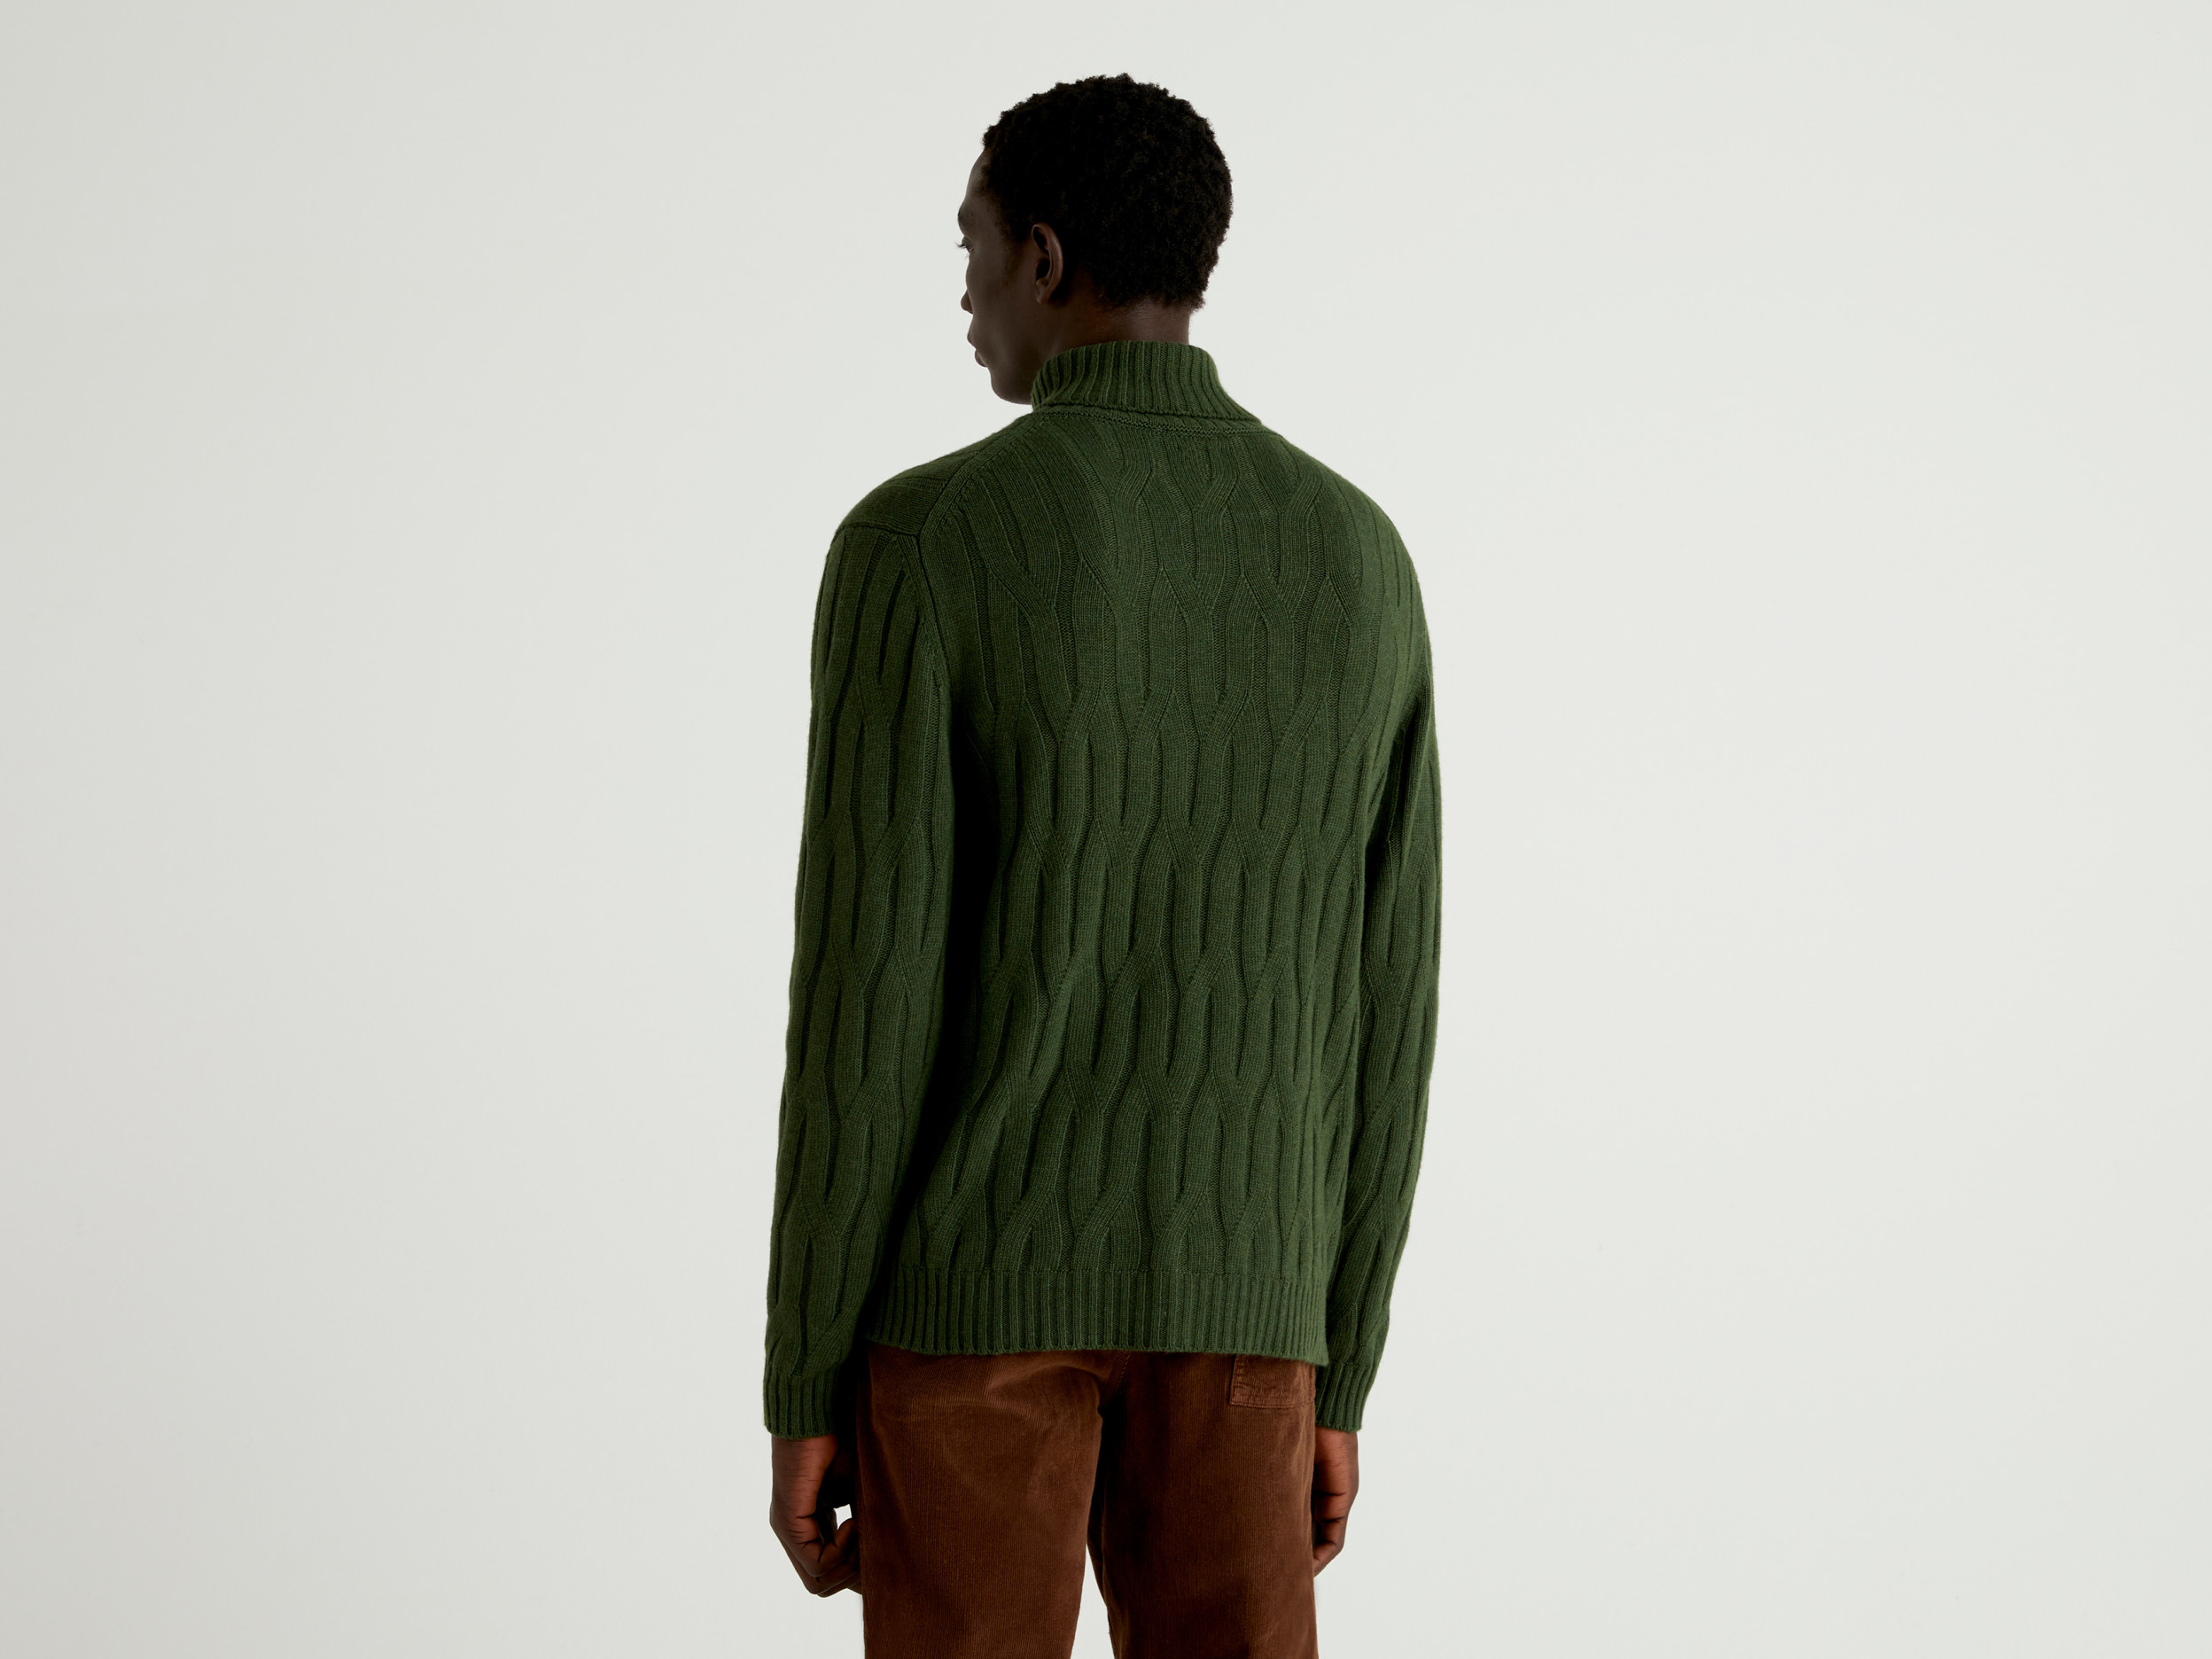 Benetton, Knit Sweater In Cashmere And Wool Blend, Taglia Xxl, Dark Green, Men